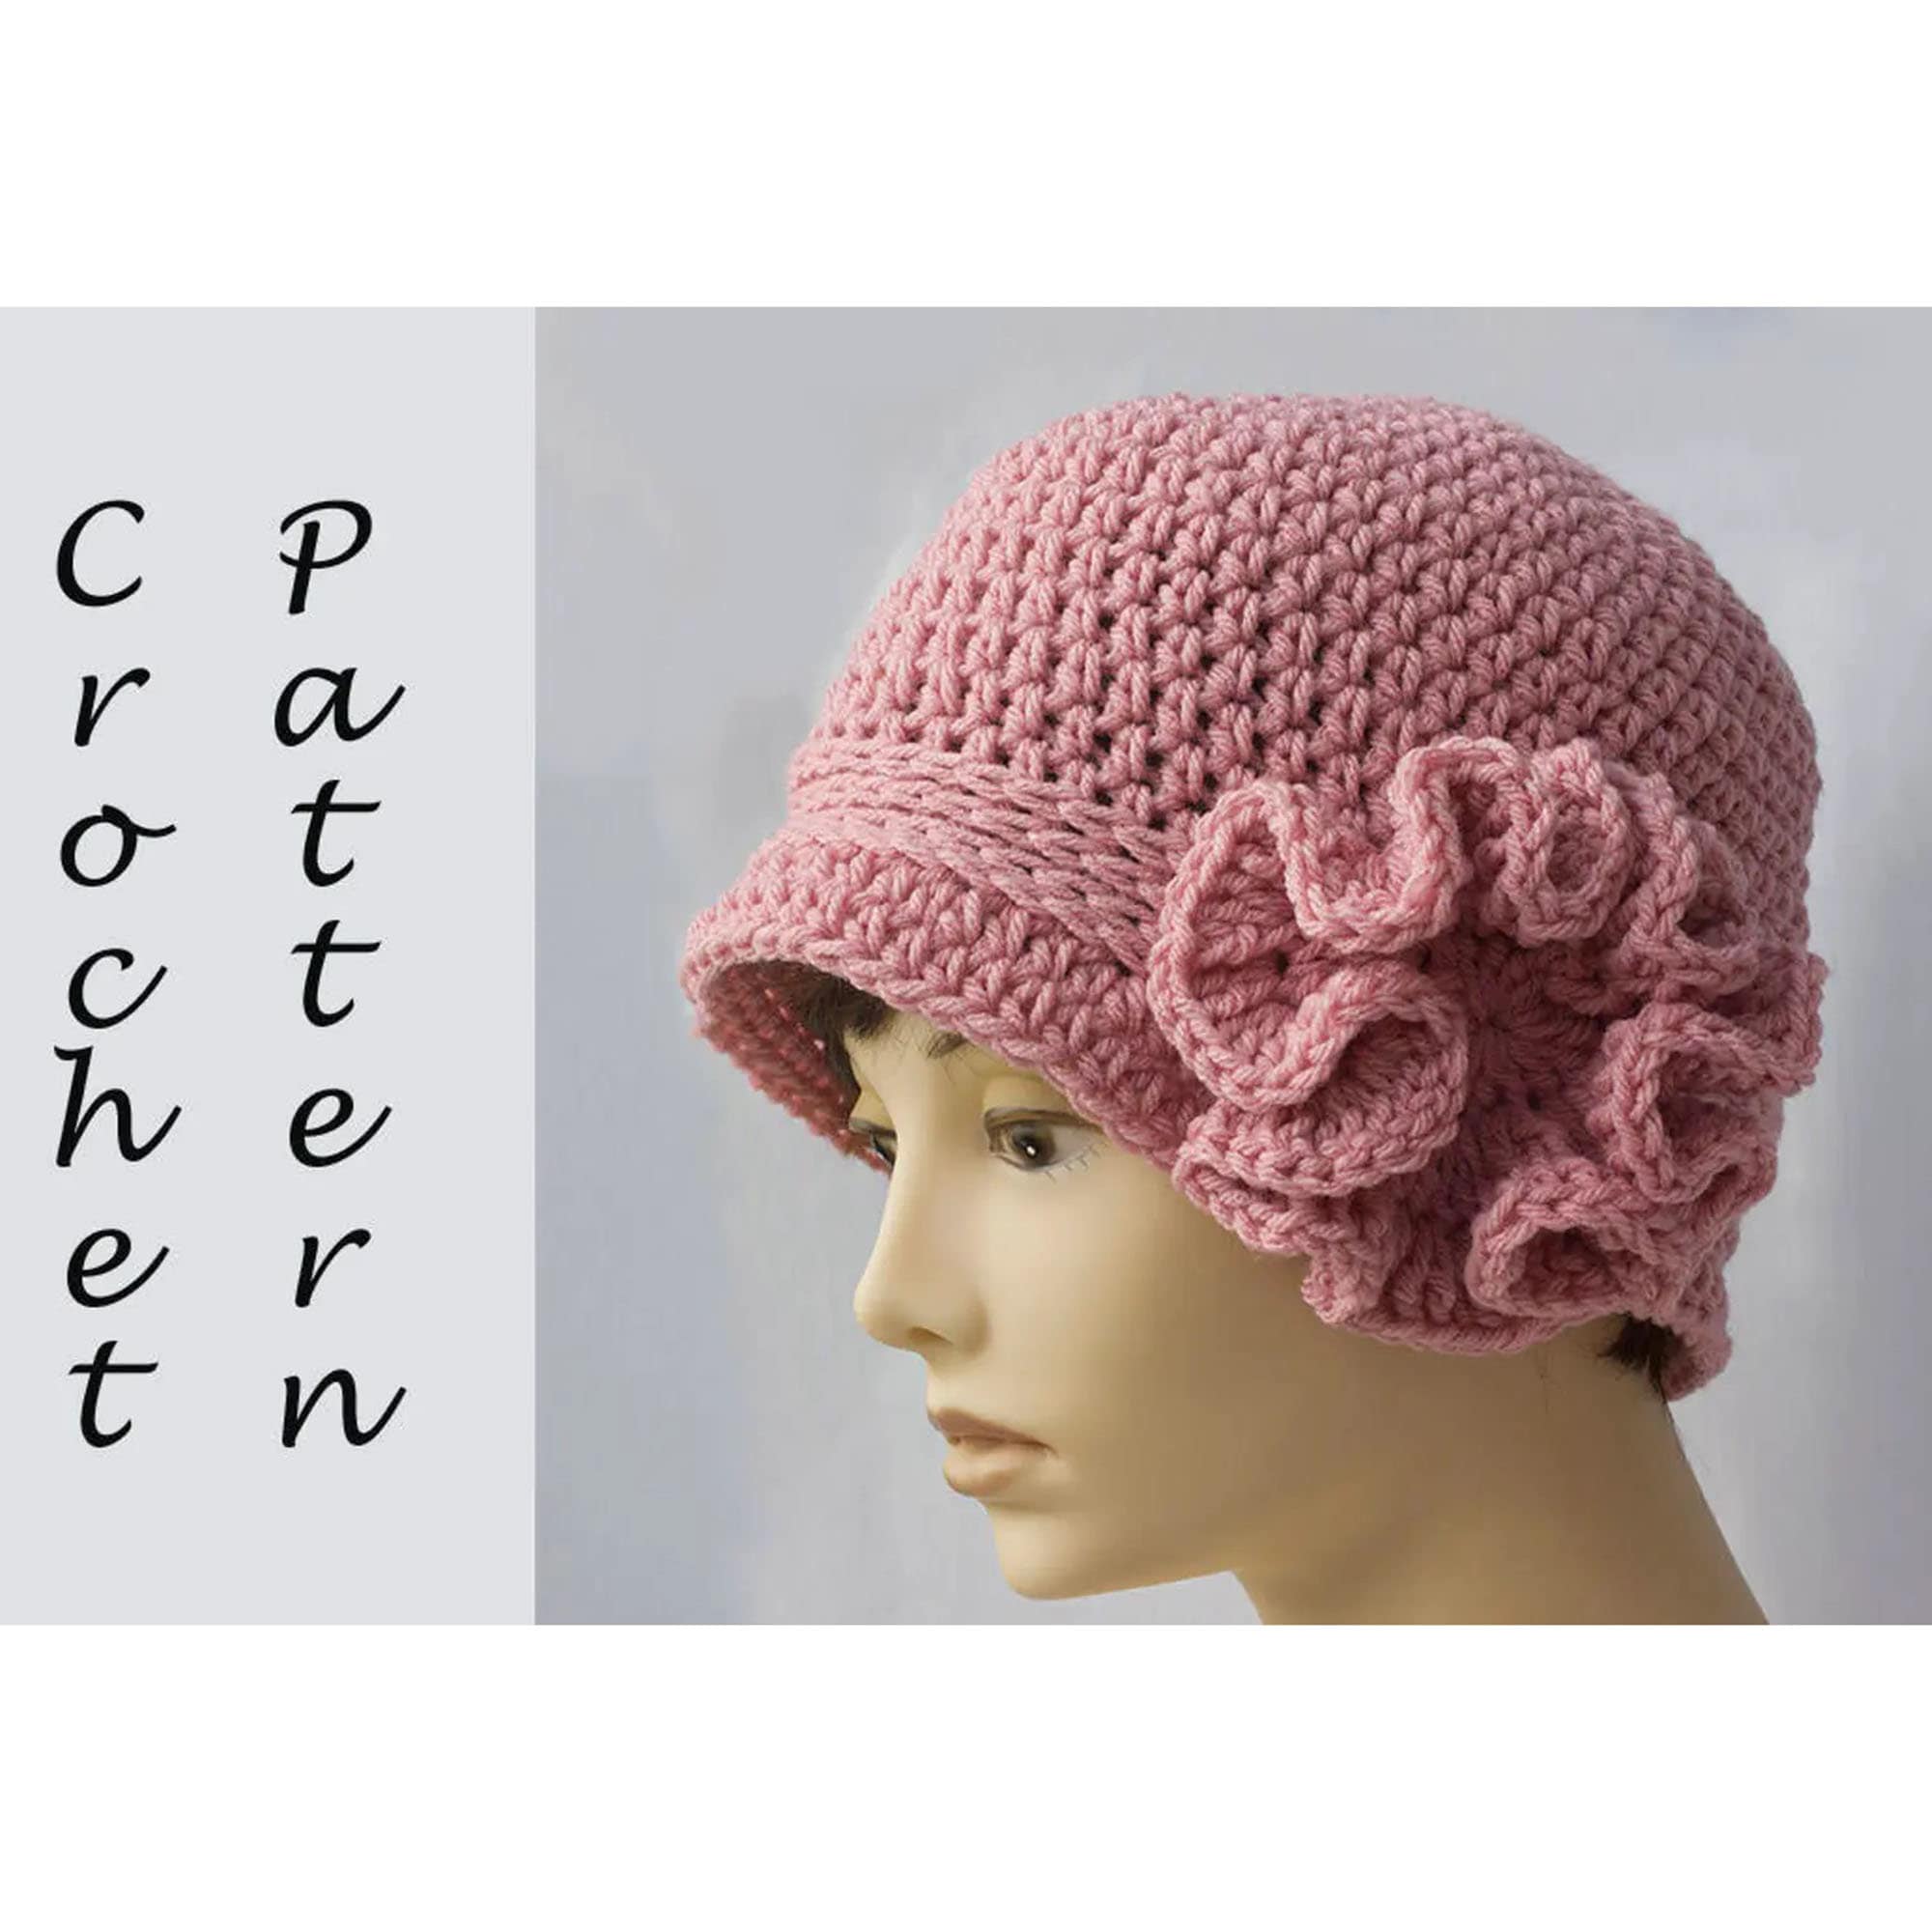 Ravelry: Crochet Pom Pom Button Hat pattern by Classy Crochet